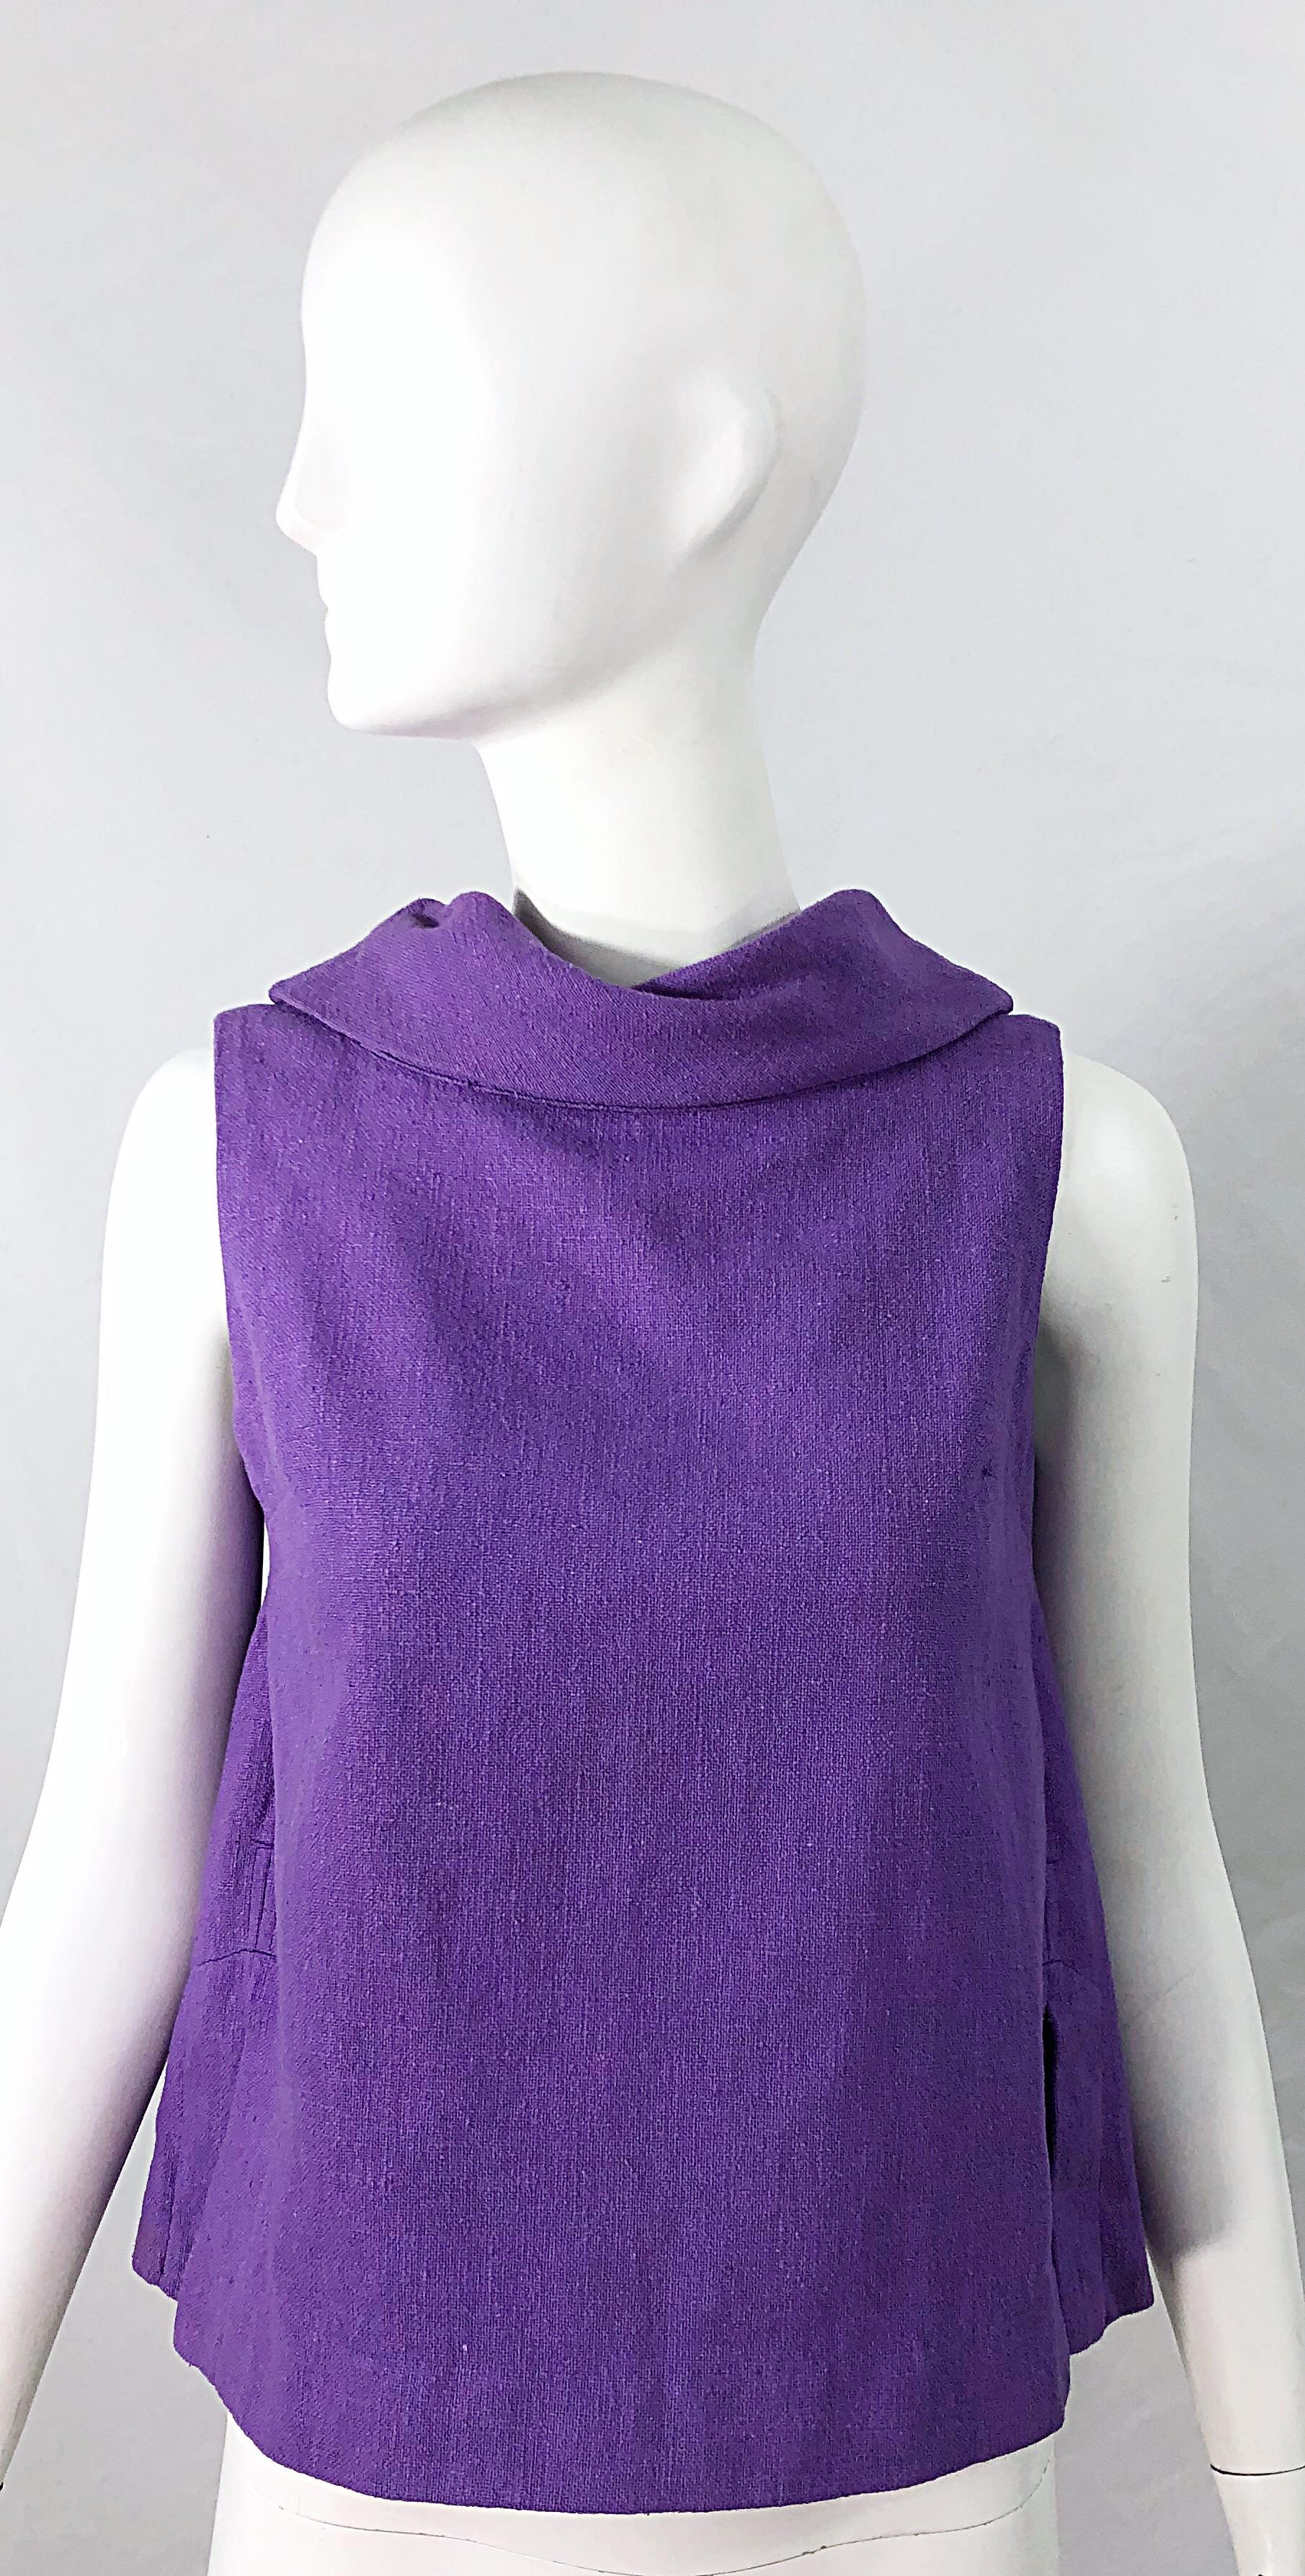 Chic 1960s Purple Linen Empire Waist Vintage 60s A Line Sleeveless Top Shirt For Sale 6